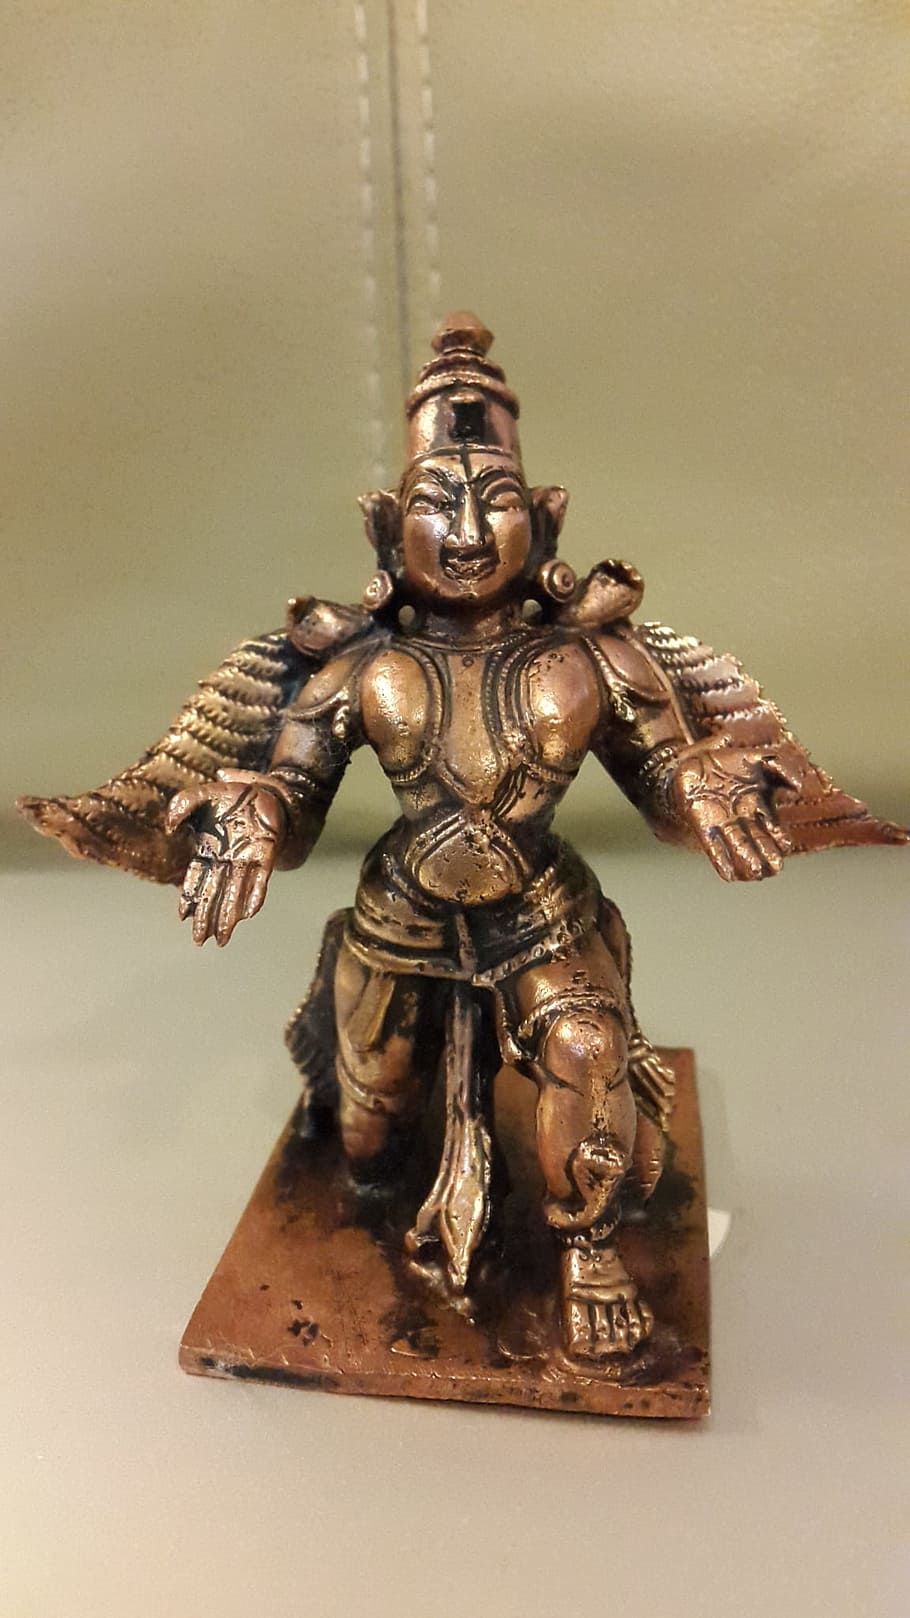 garuda, hindi god, mount of the lord vishnu, statue, antique